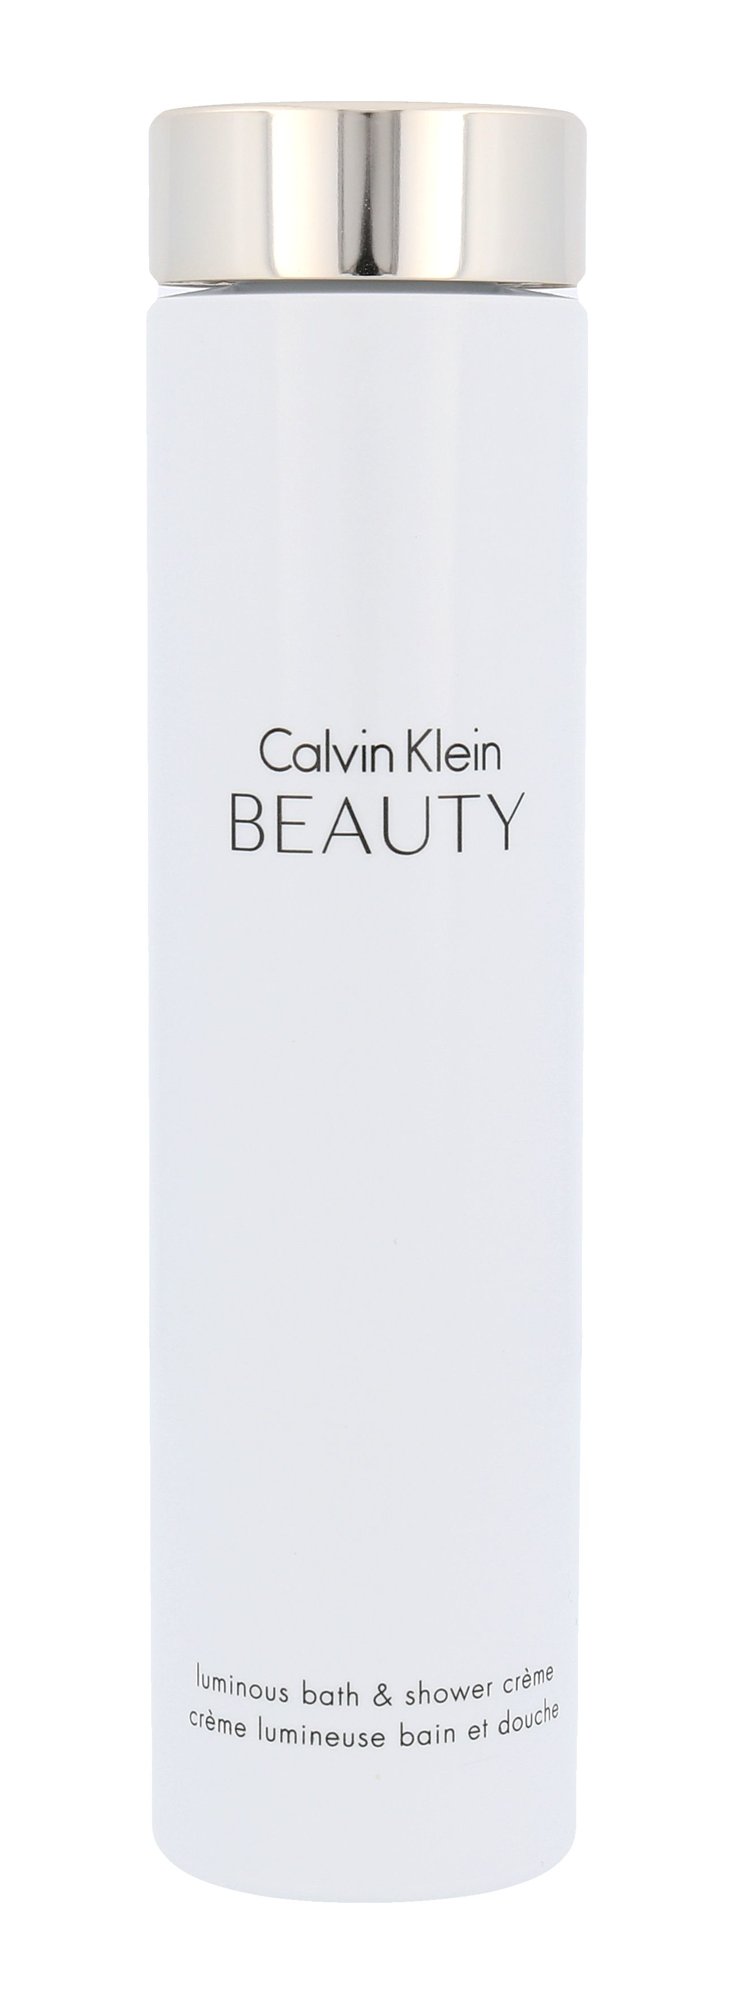 Calvin Klein Beauty 200ml dušo želė